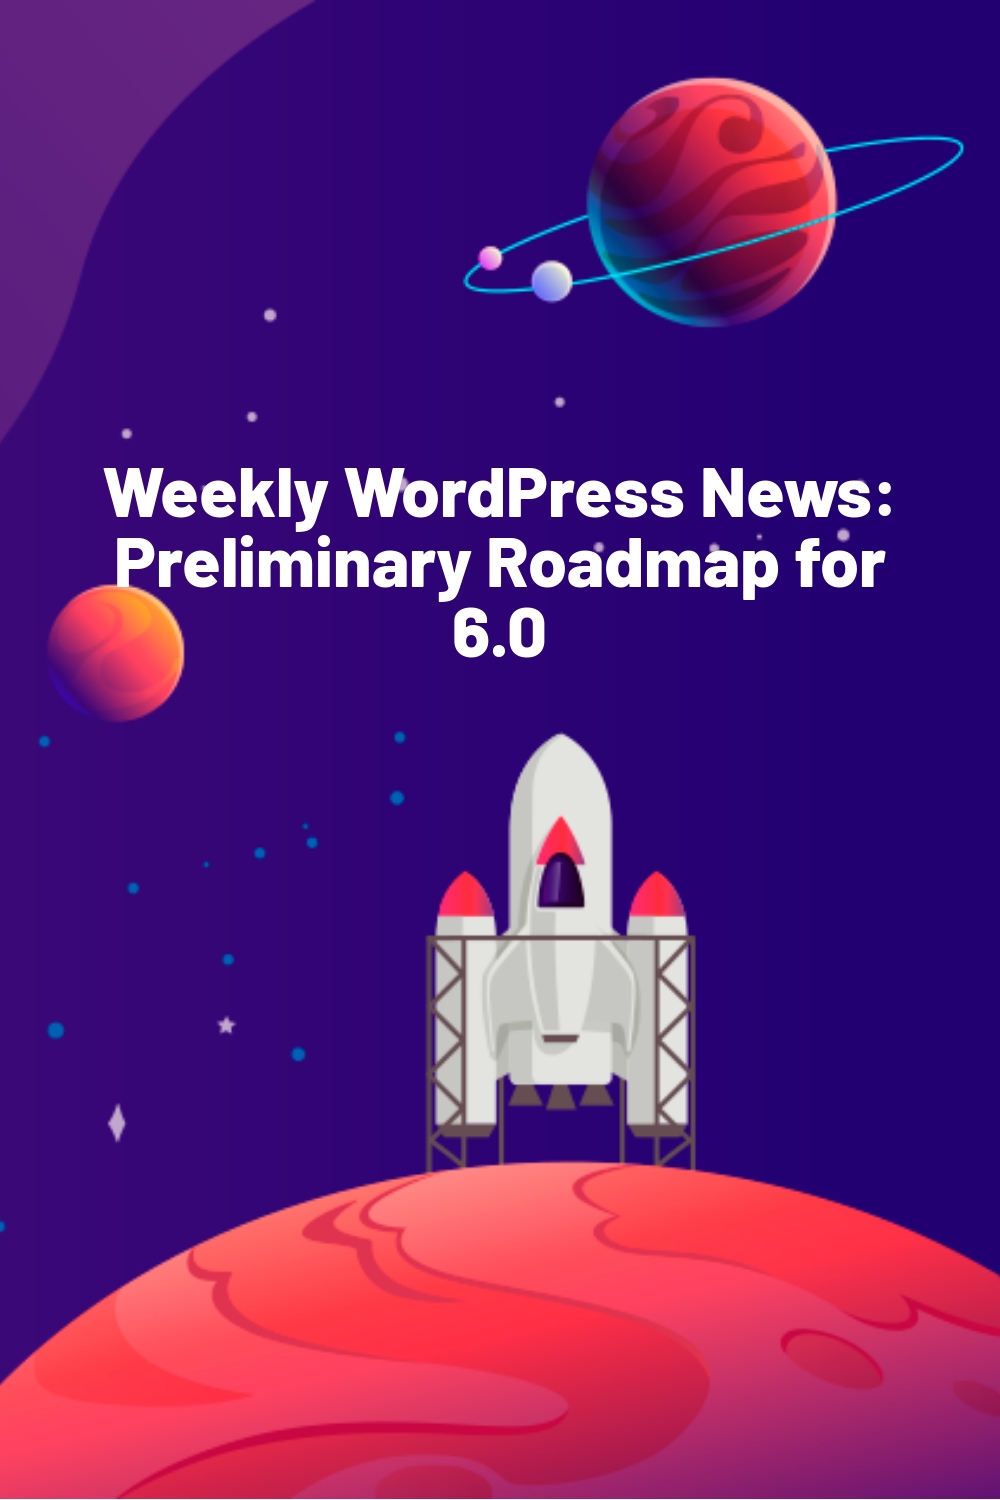 Weekly WordPress News: Preliminary Roadmap for 6.0